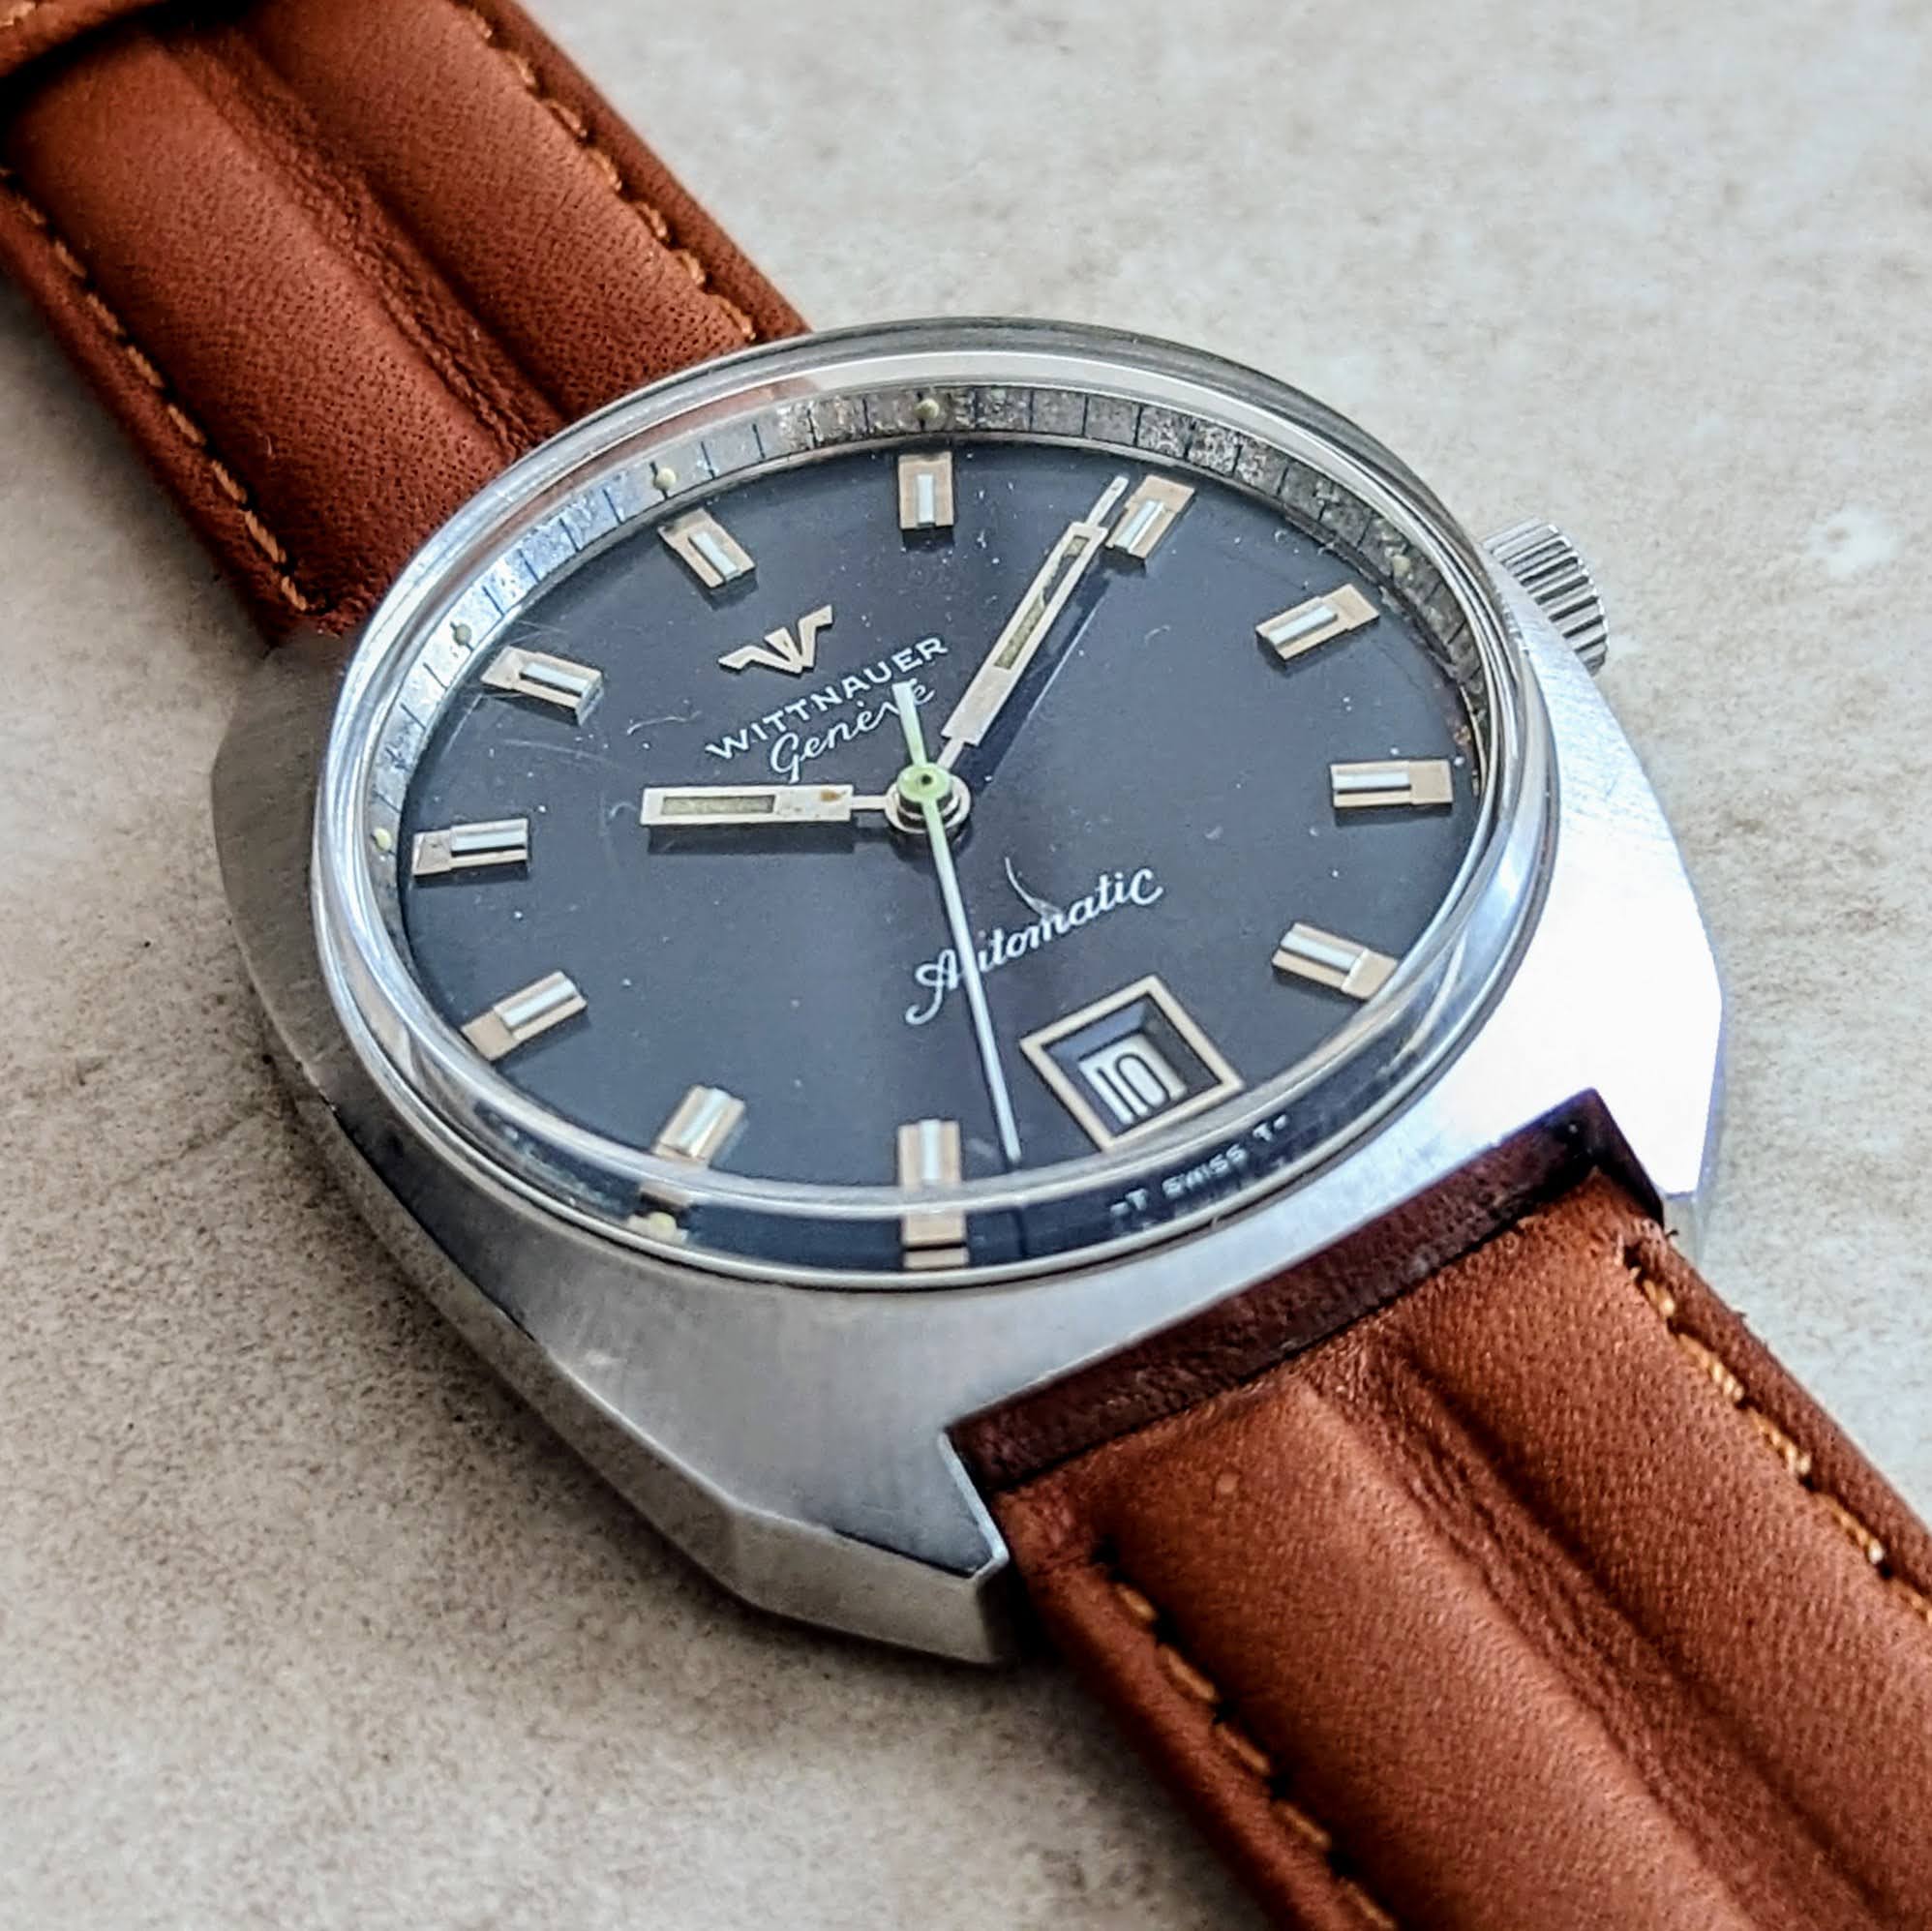 WITTNAUER Geneve Automatic Watch Date Indicator Cal. C11KAS-2 Swiss Wristwatch